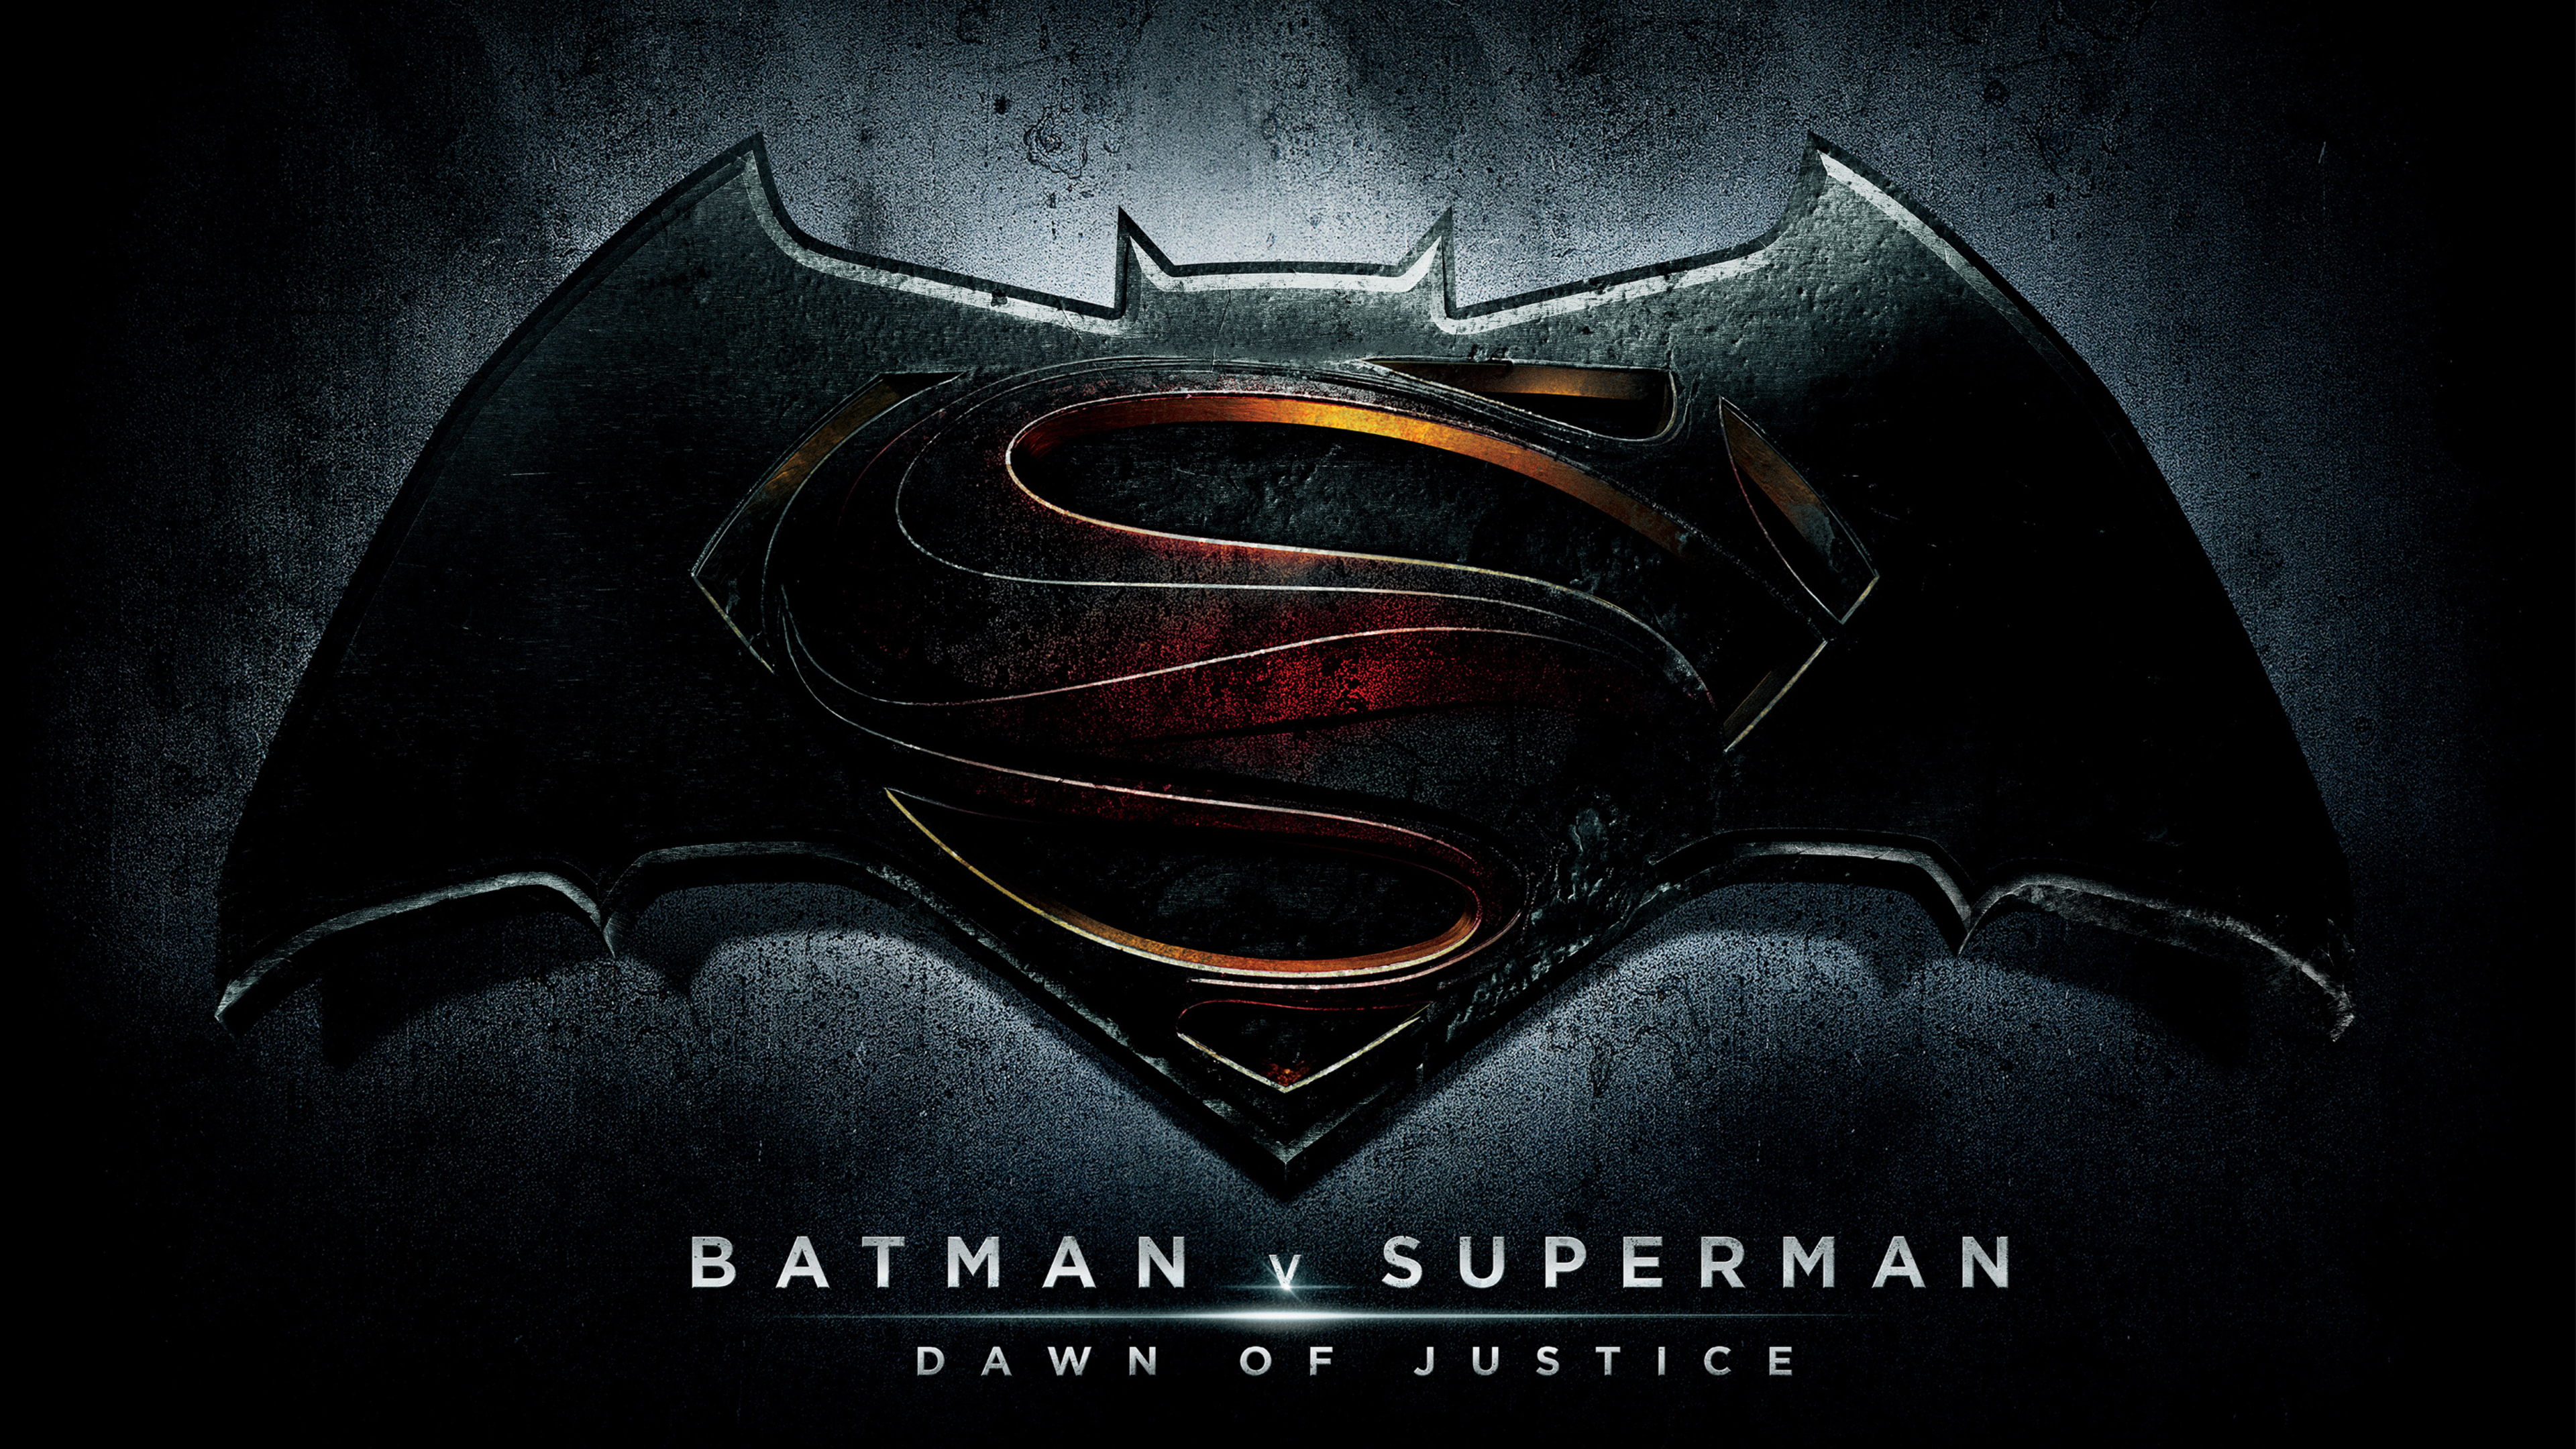 Free photo Batman v. Superman movie logo